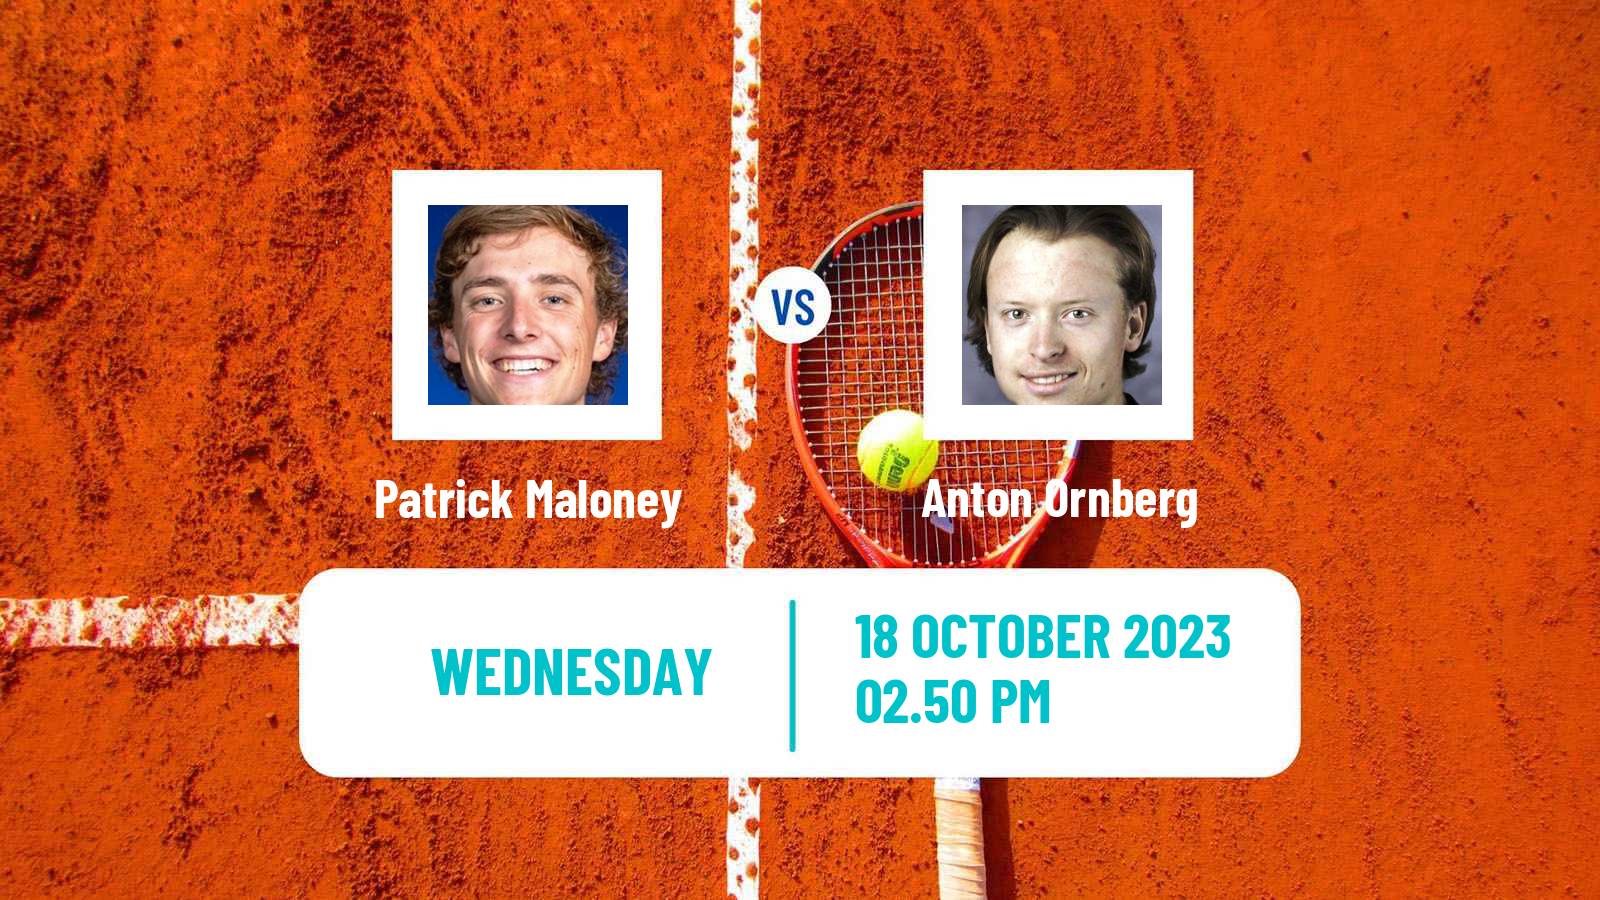 Tennis ITF M15 Las Vegas Nv Men Patrick Maloney - Anton Ornberg